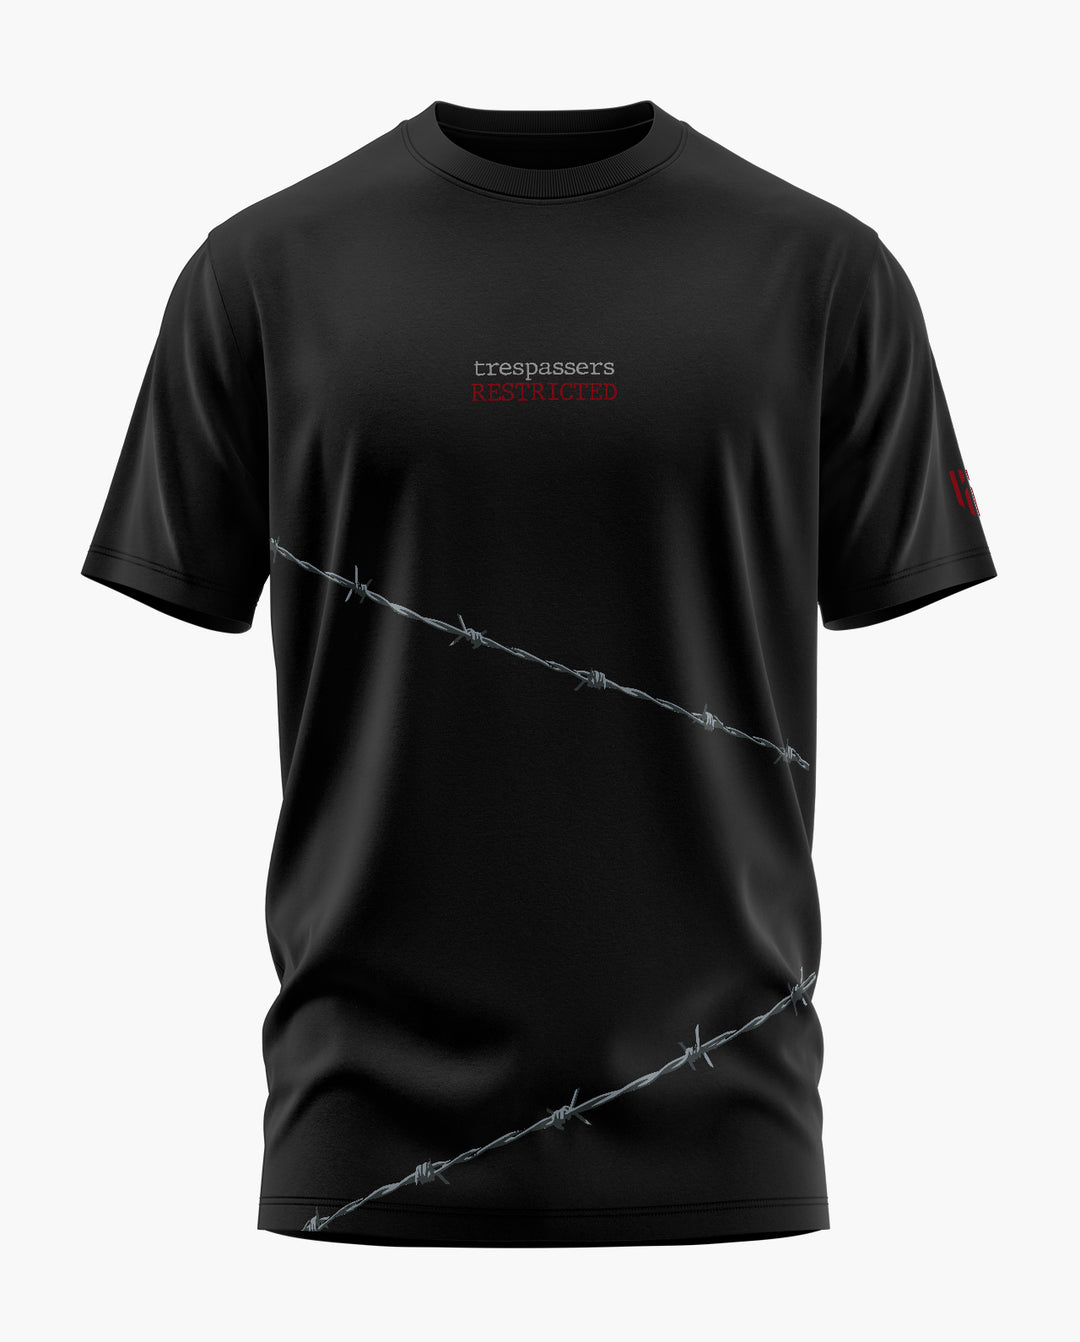 Trespassers Restricted T-Shirt